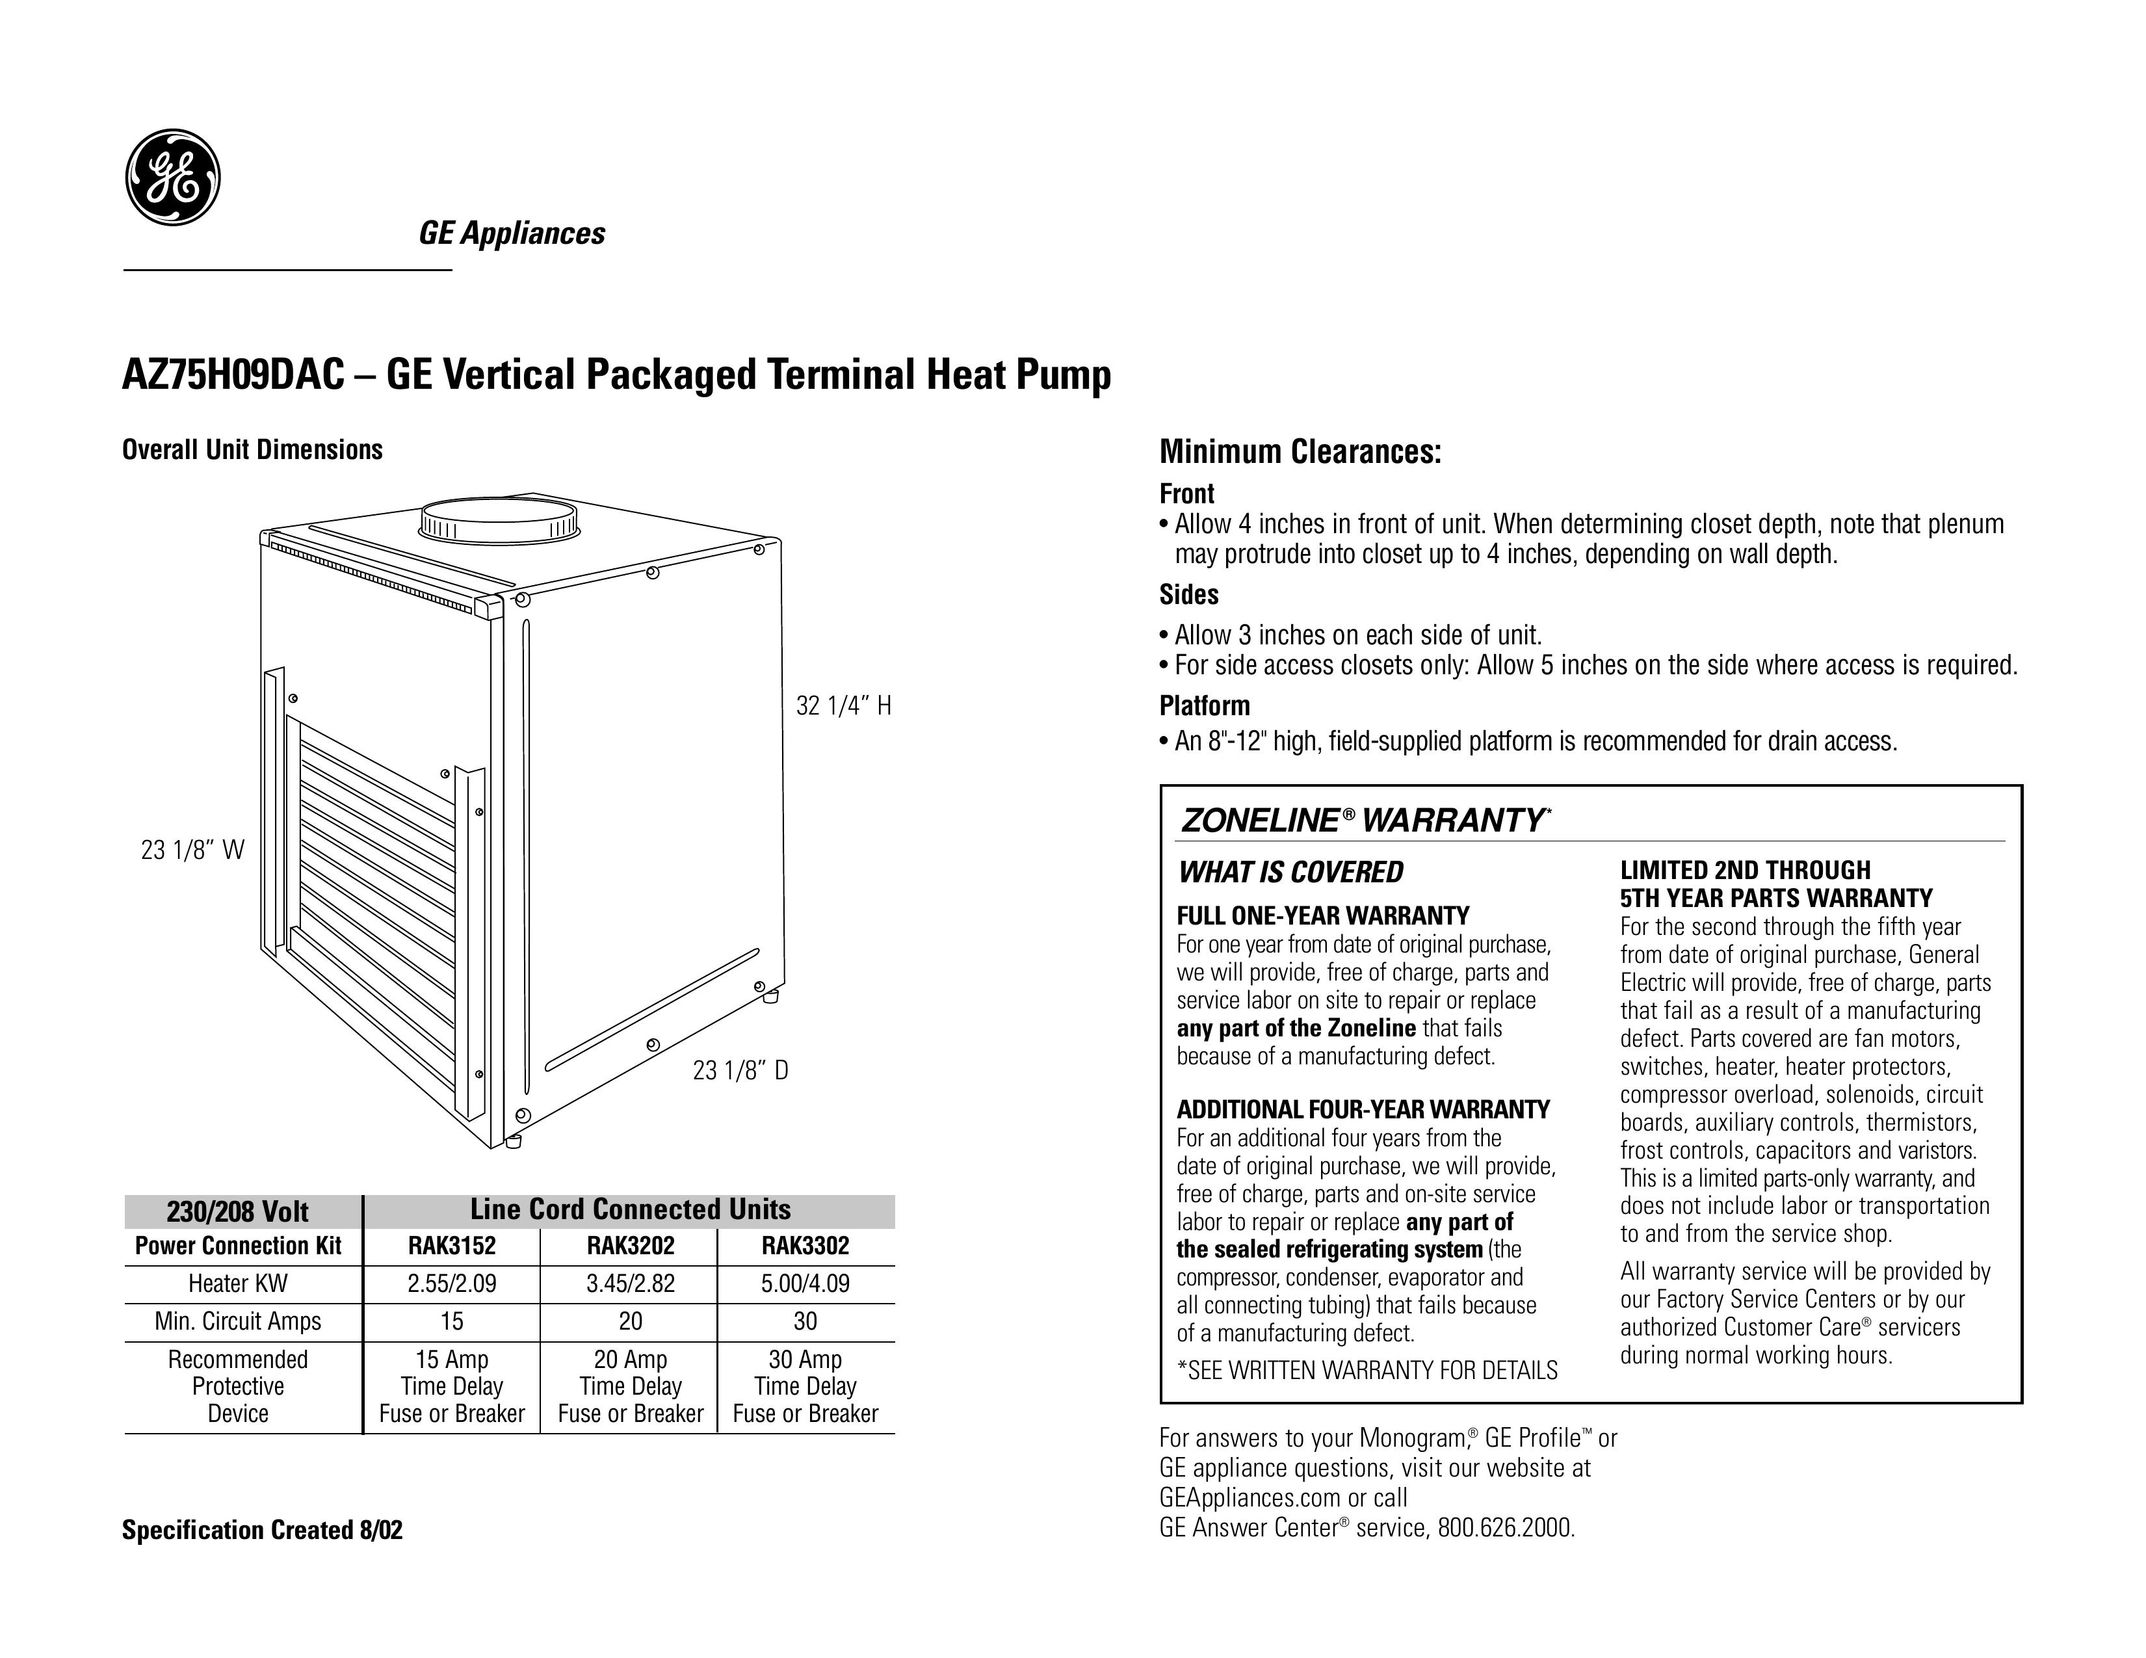 GE AZ75H09DAC Heat Pump User Manual